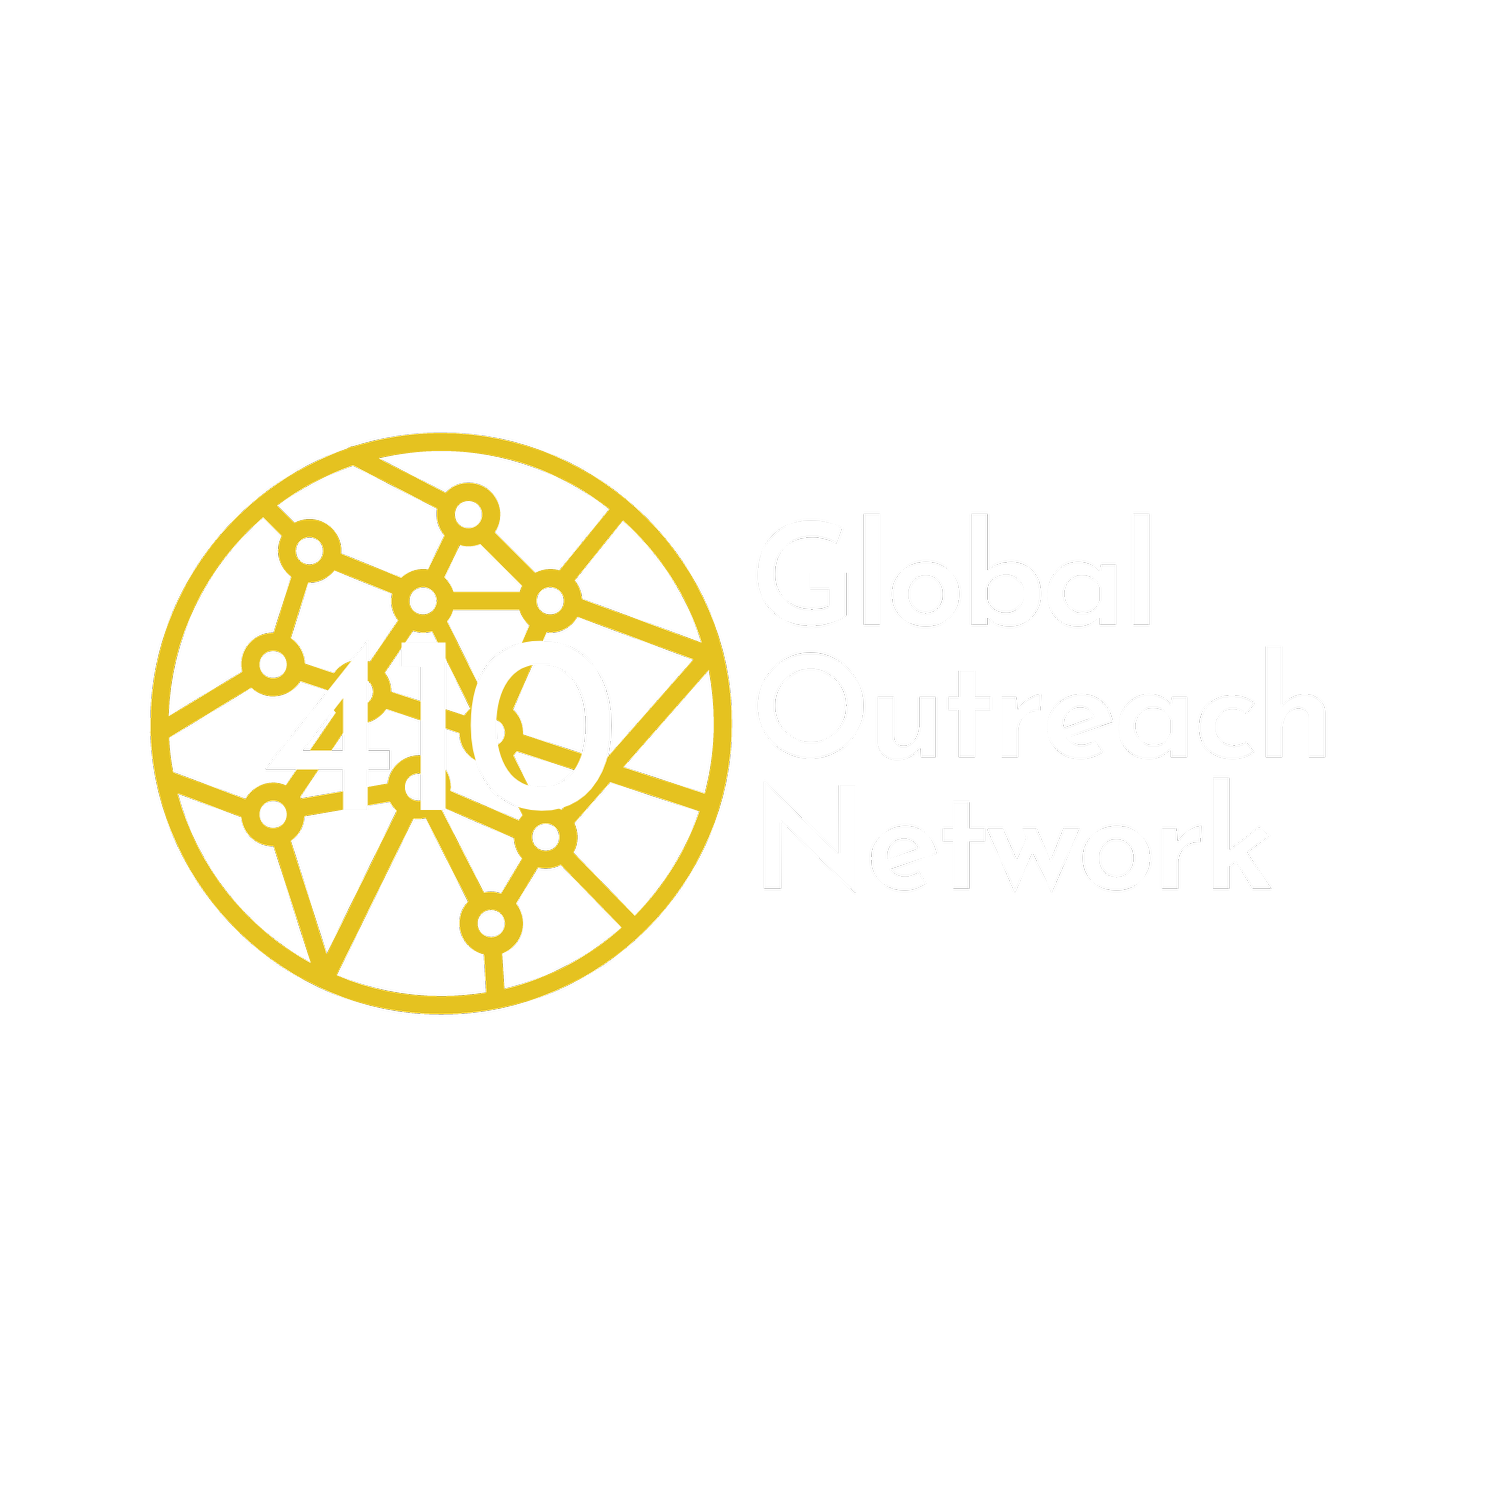 410 Global Outreach Network